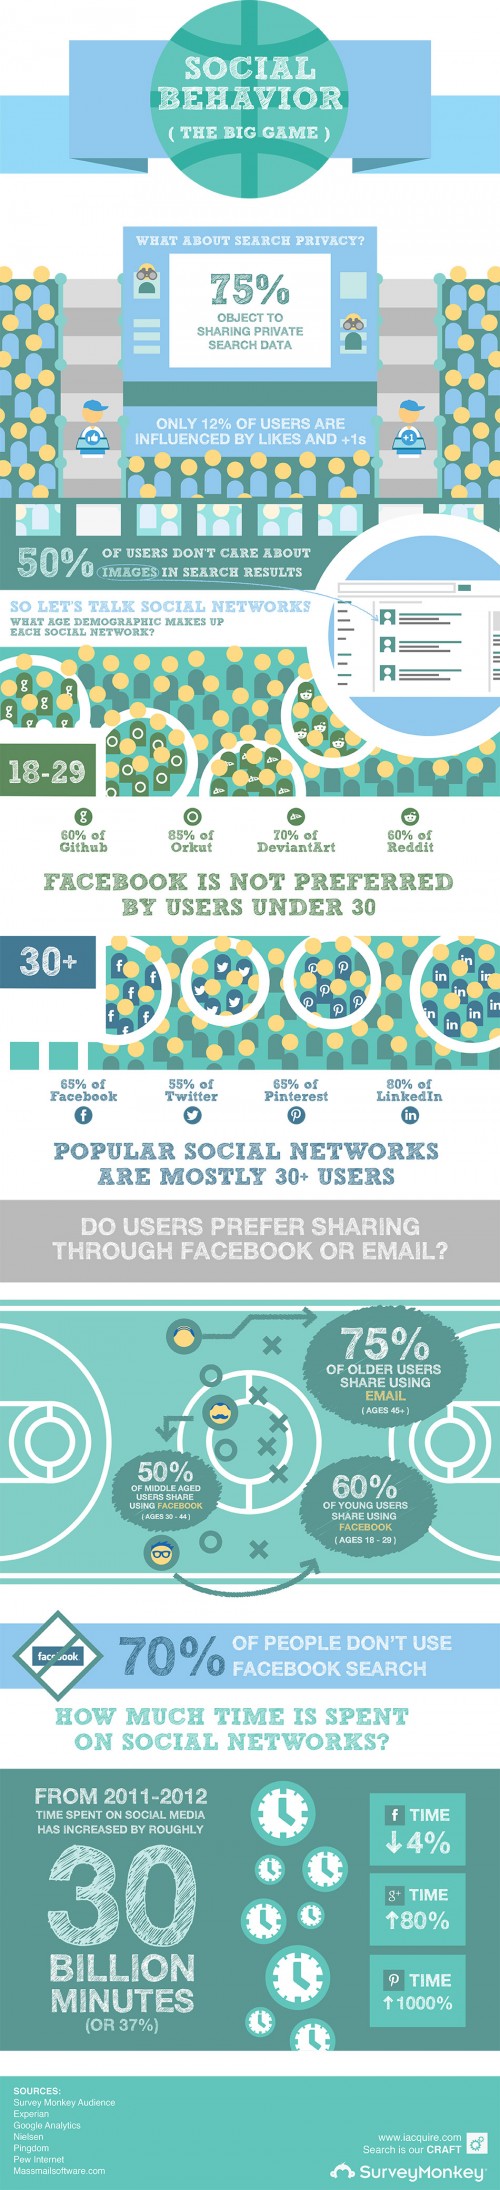 Social Media And Behavior Study Infographic